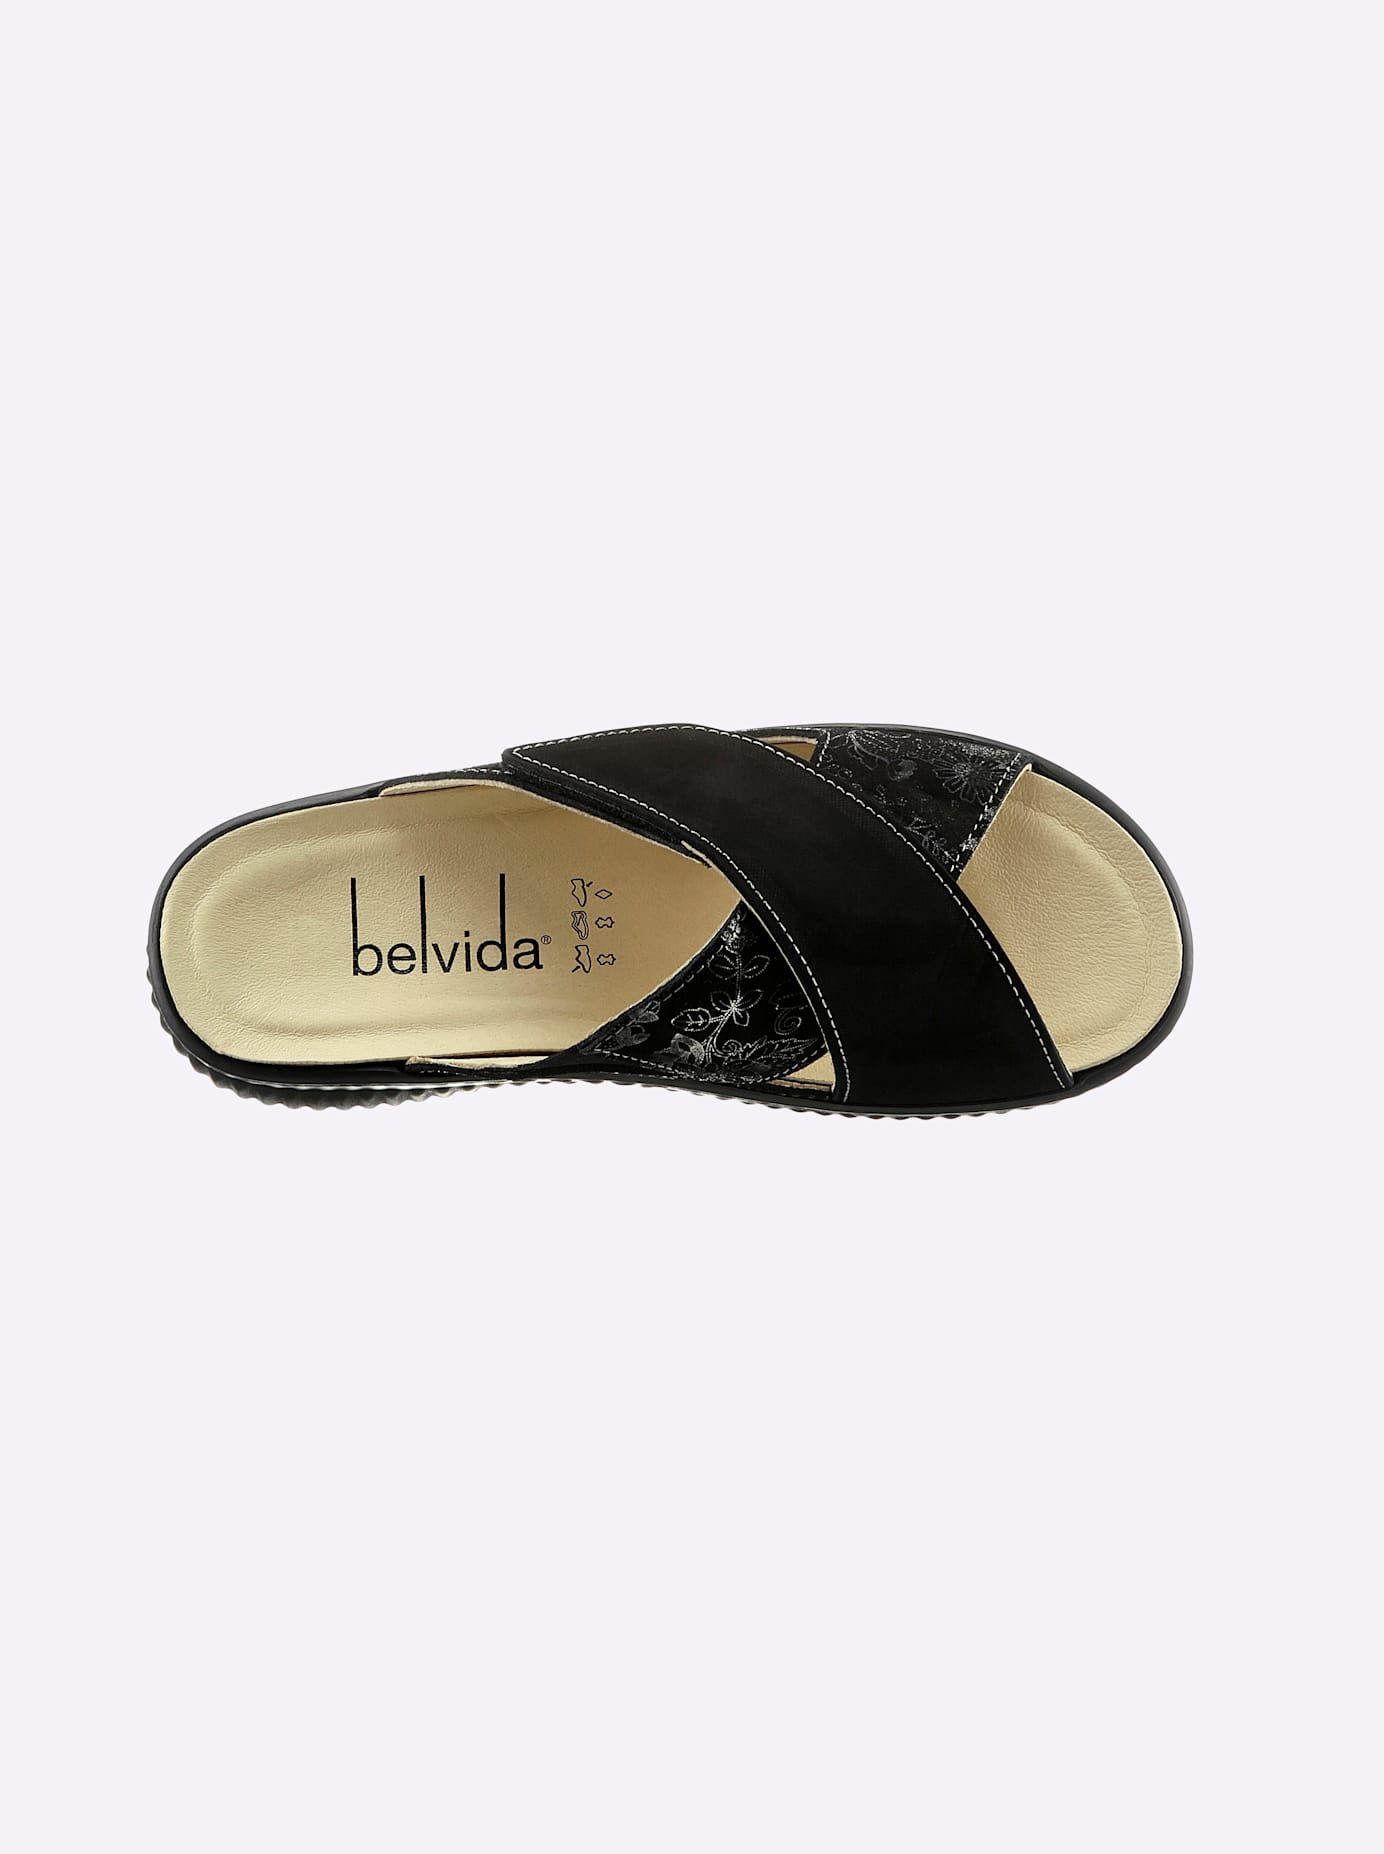 Belvida Slippers